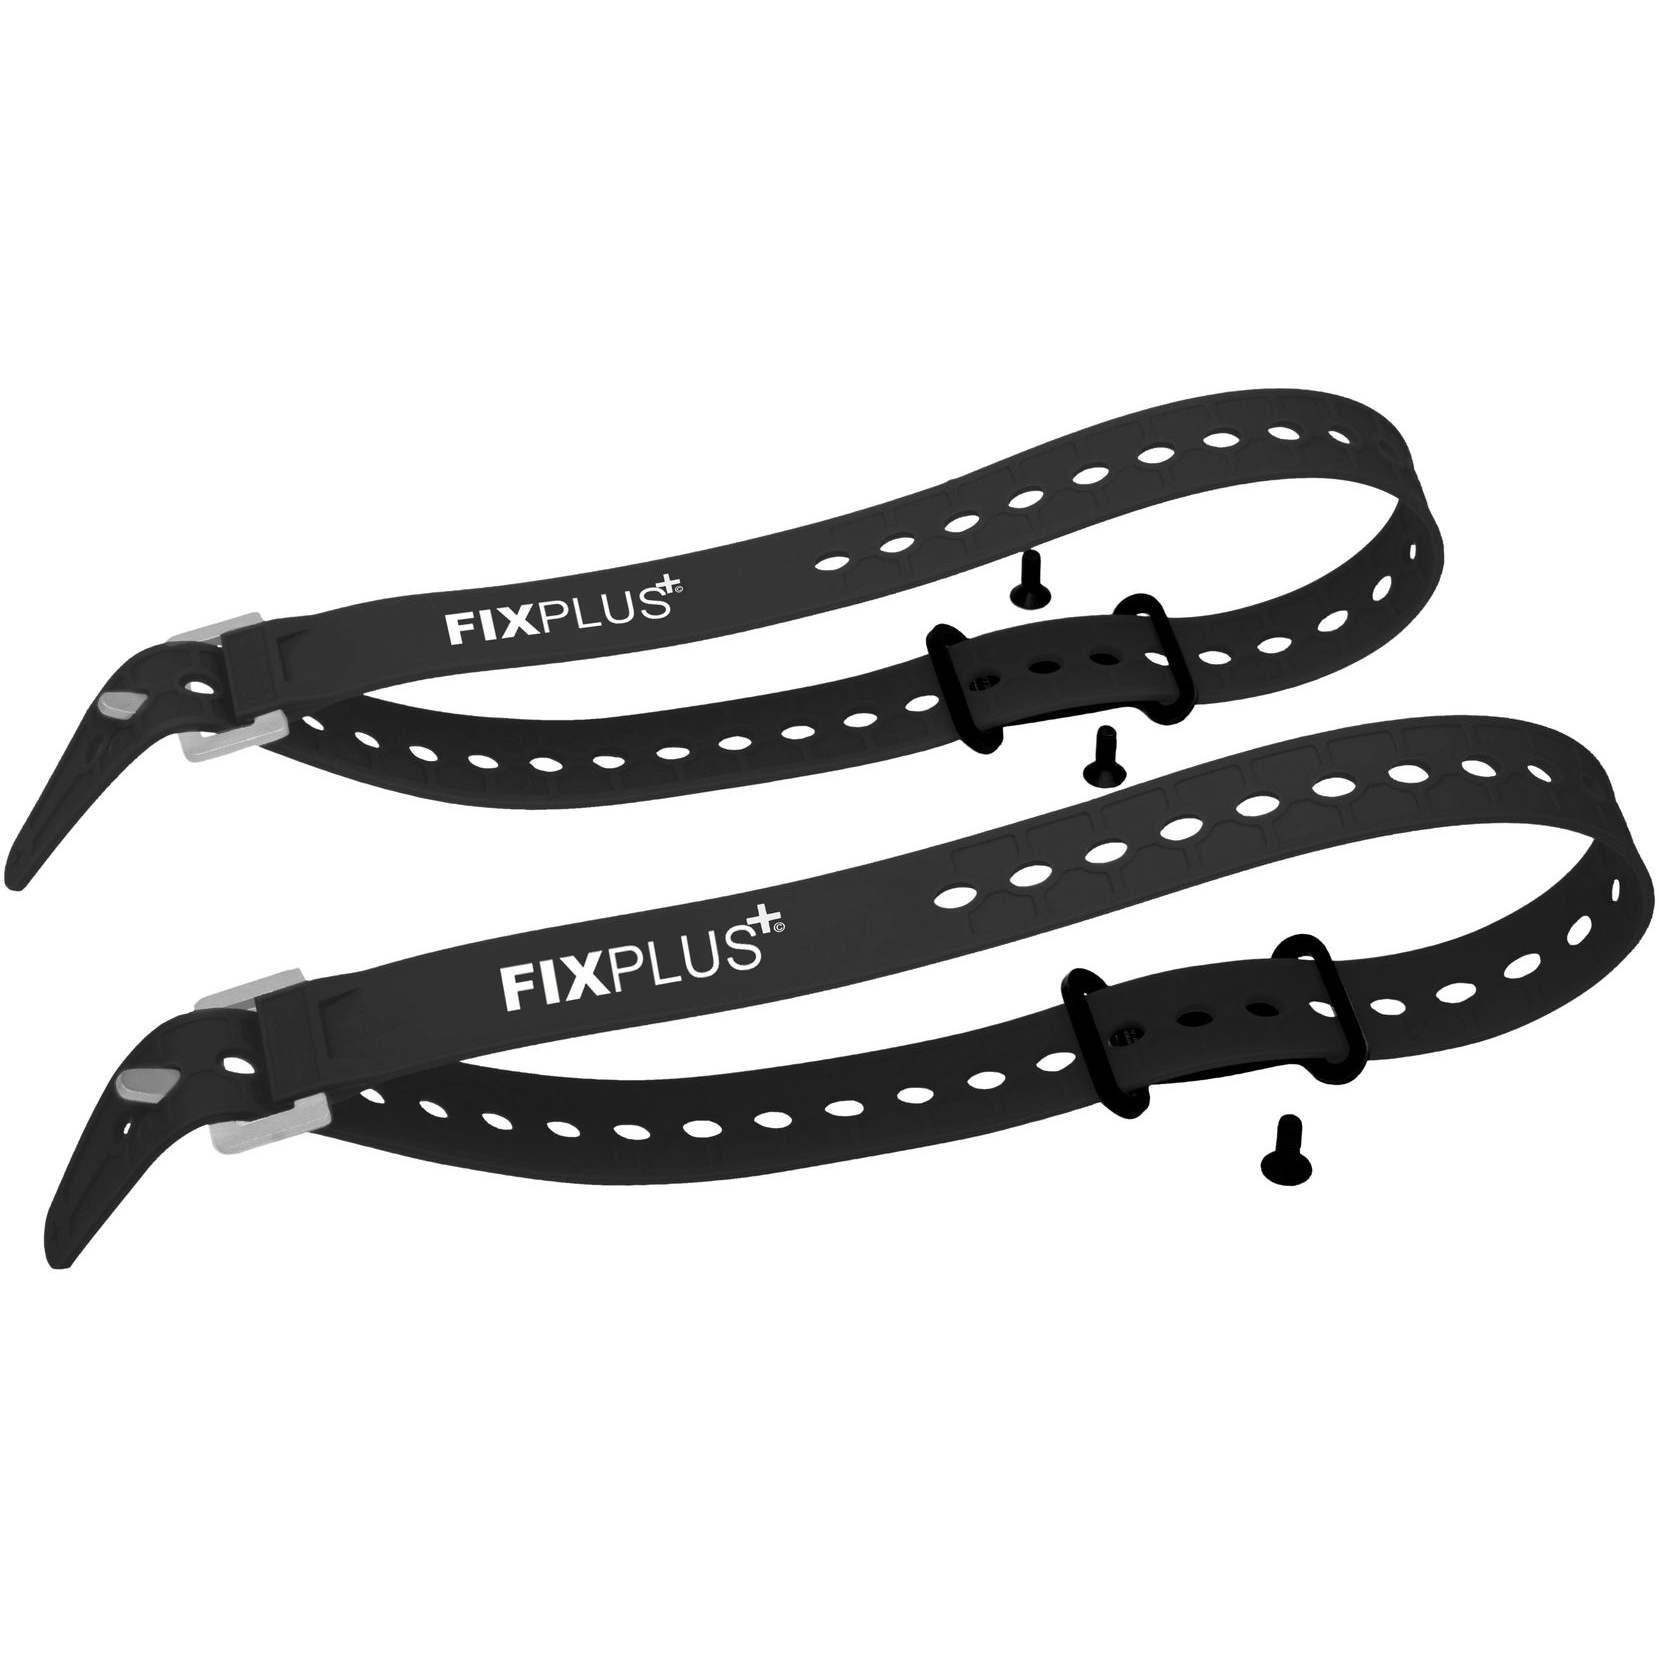 Productfoto van FixPlus Strap Anchor 2 pcs. incl. 2x Strap Black 66cm - black/black